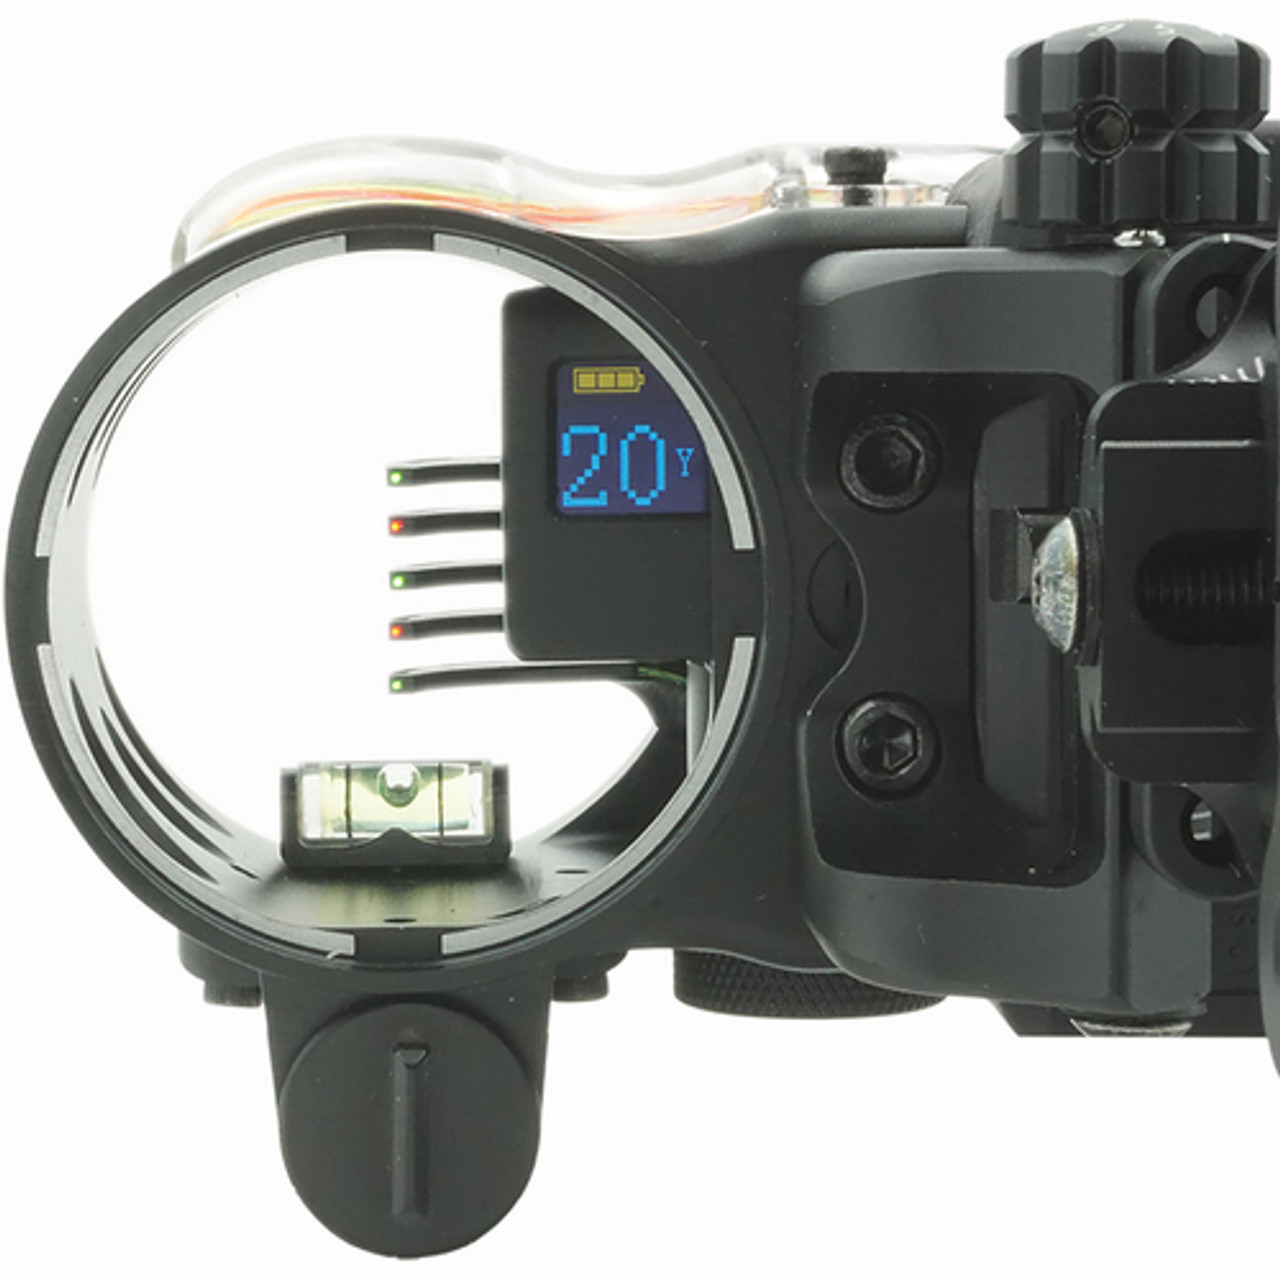 IQ00354 IQ Bowsights Define Range Finding Sight 5 Pin OLED Display